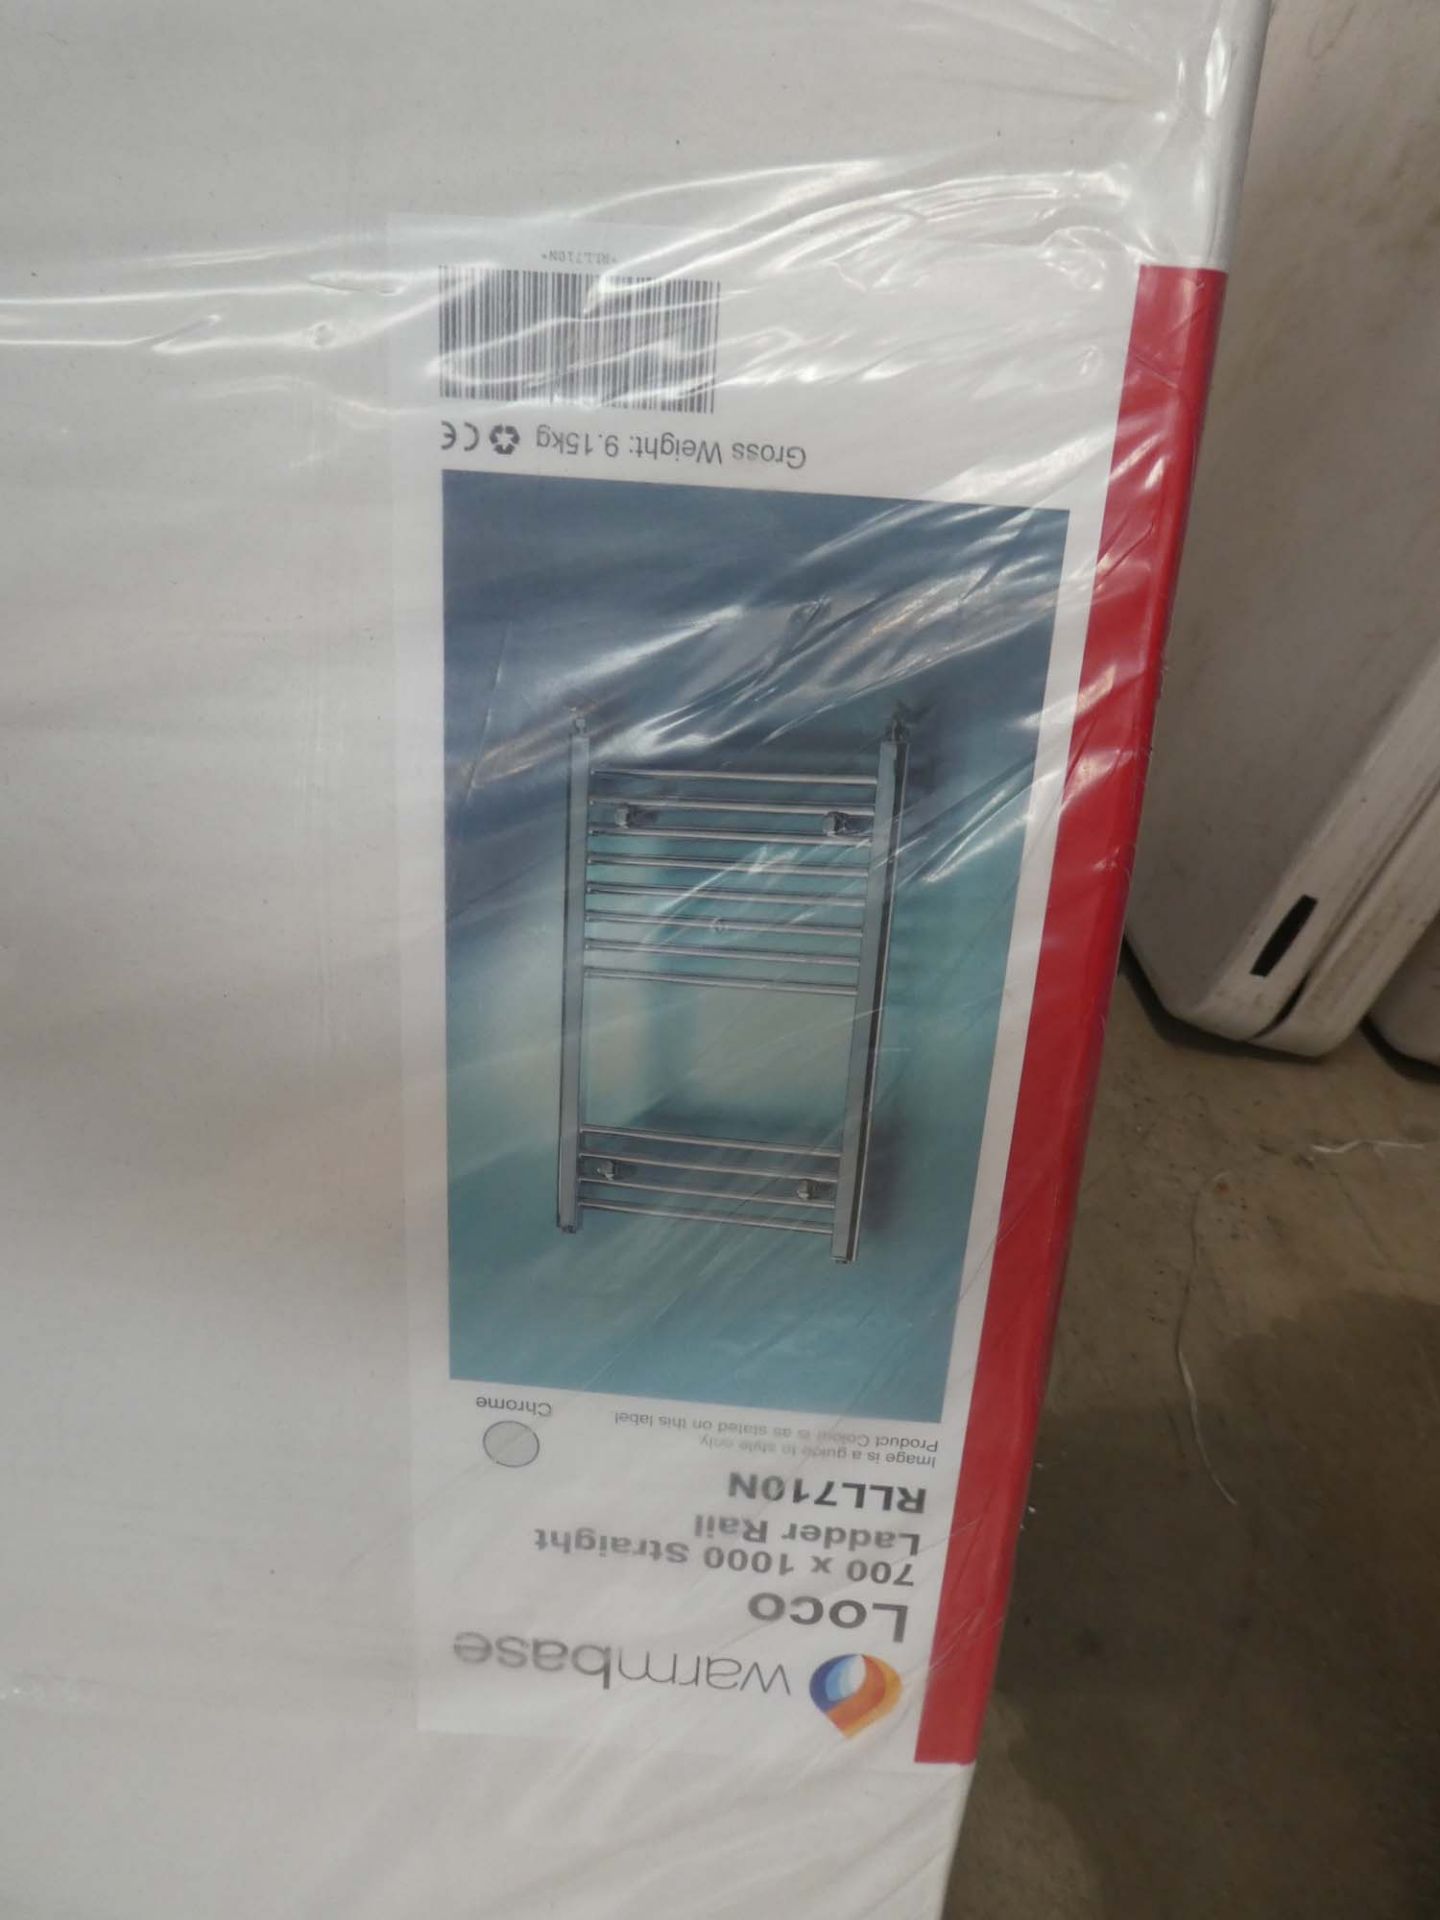 Boxed chrome towel radiator